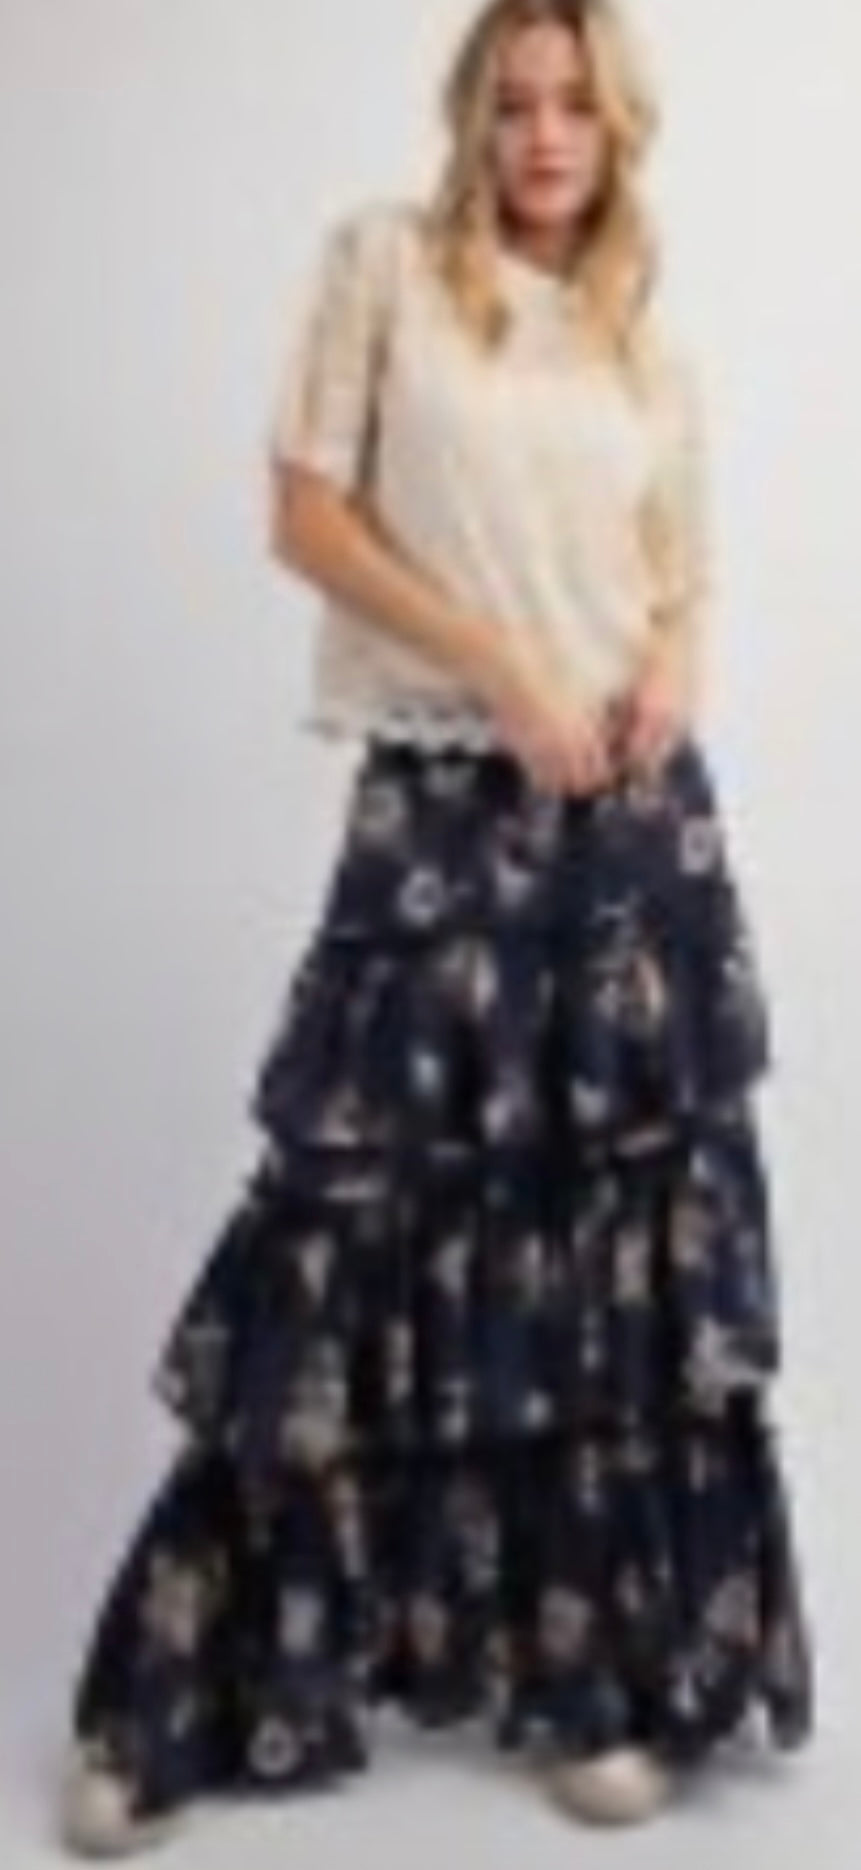 Navy Floral Dress/Skirt